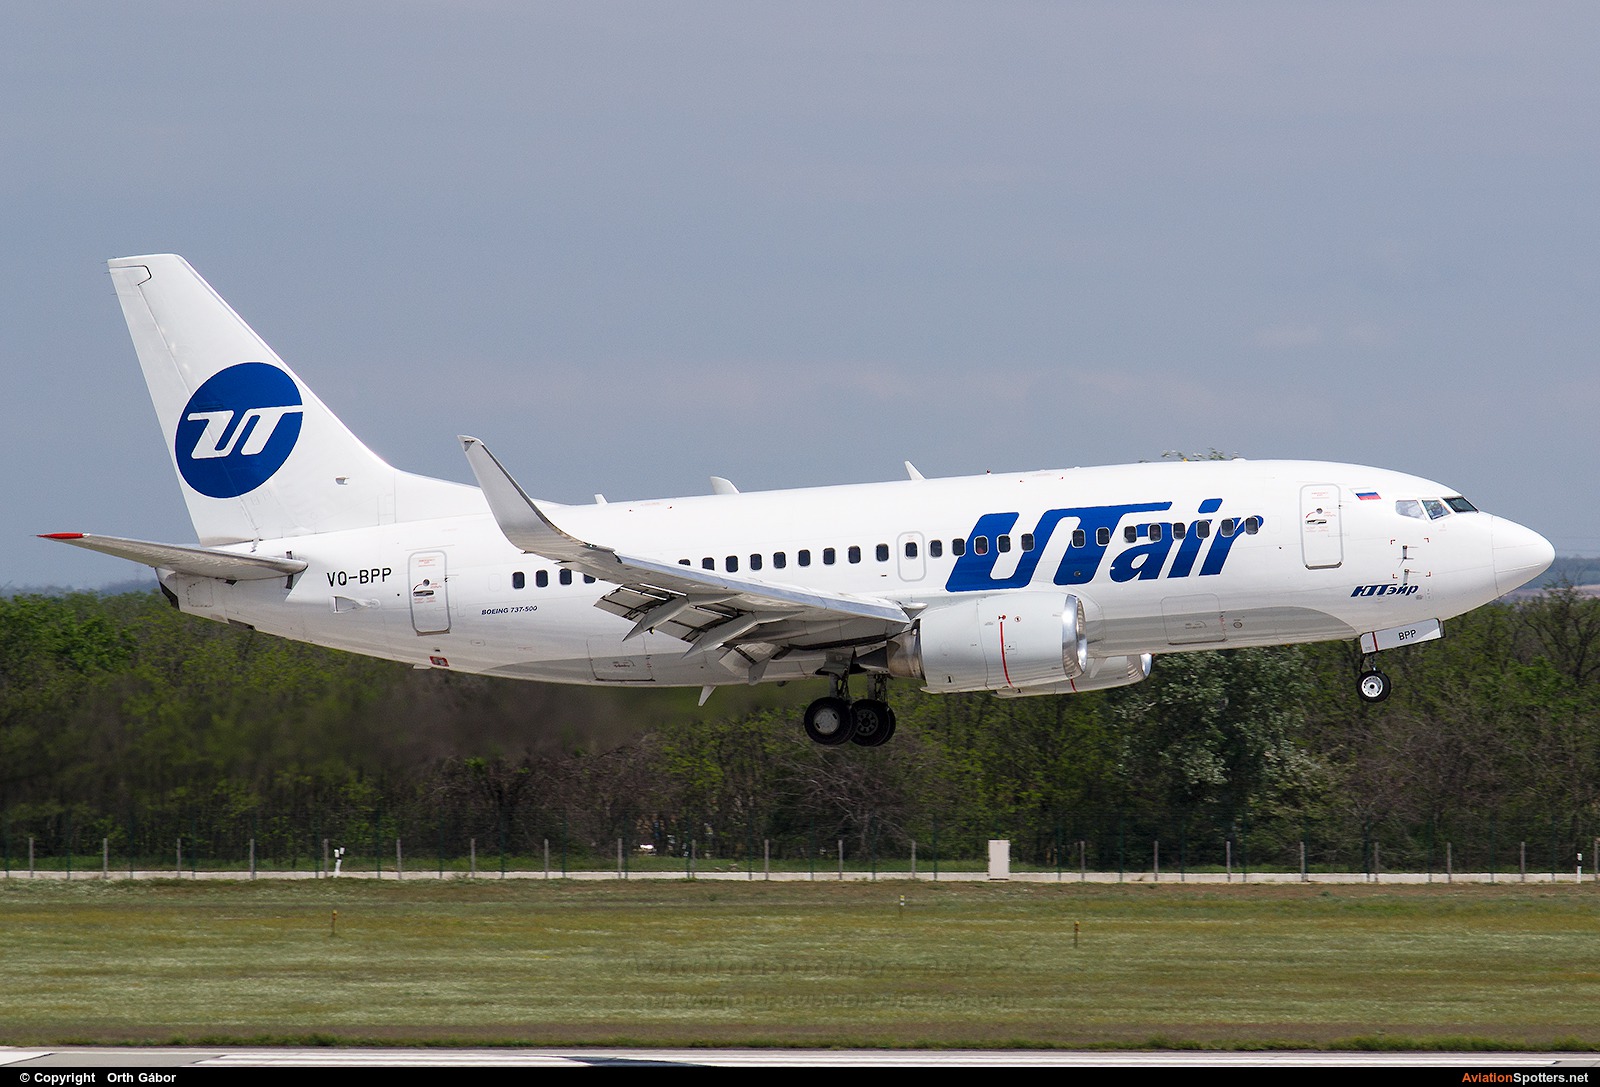 UTair  -  737-500  (VQ-BPP) By Orth Gábor (Roodkop)